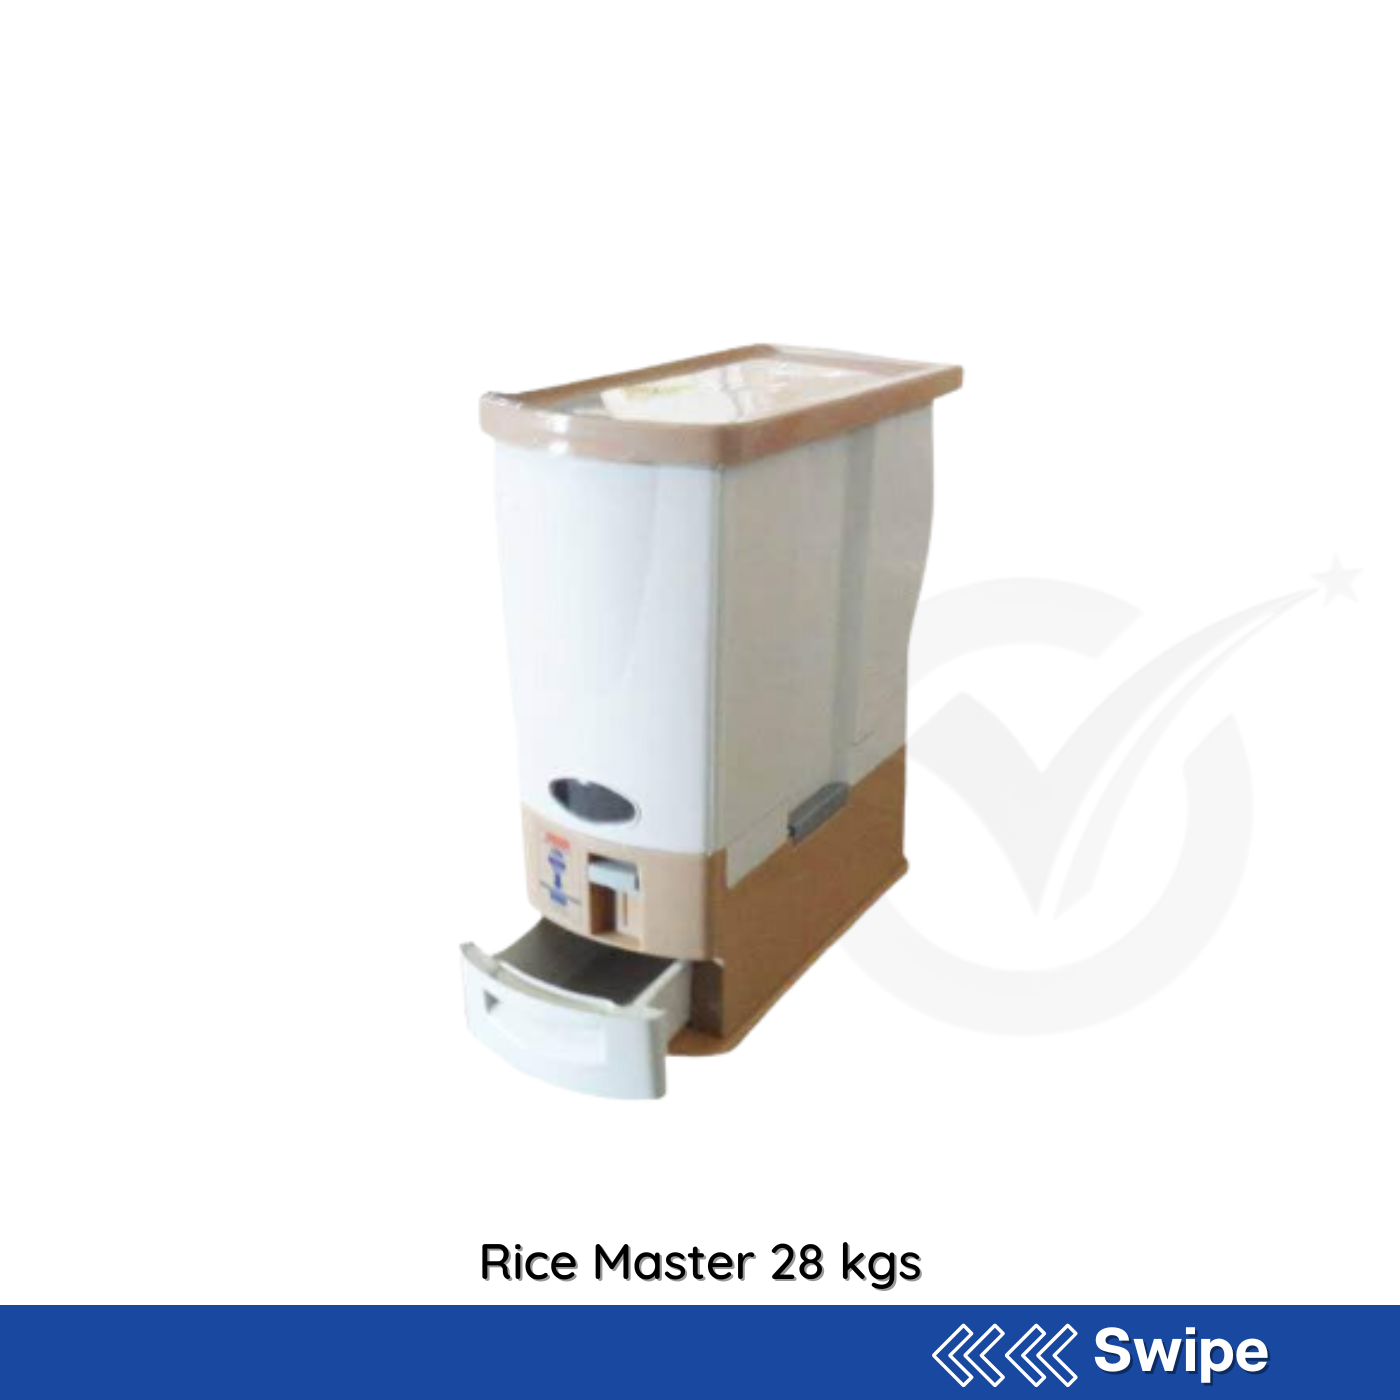 Rice Master 28 kgs